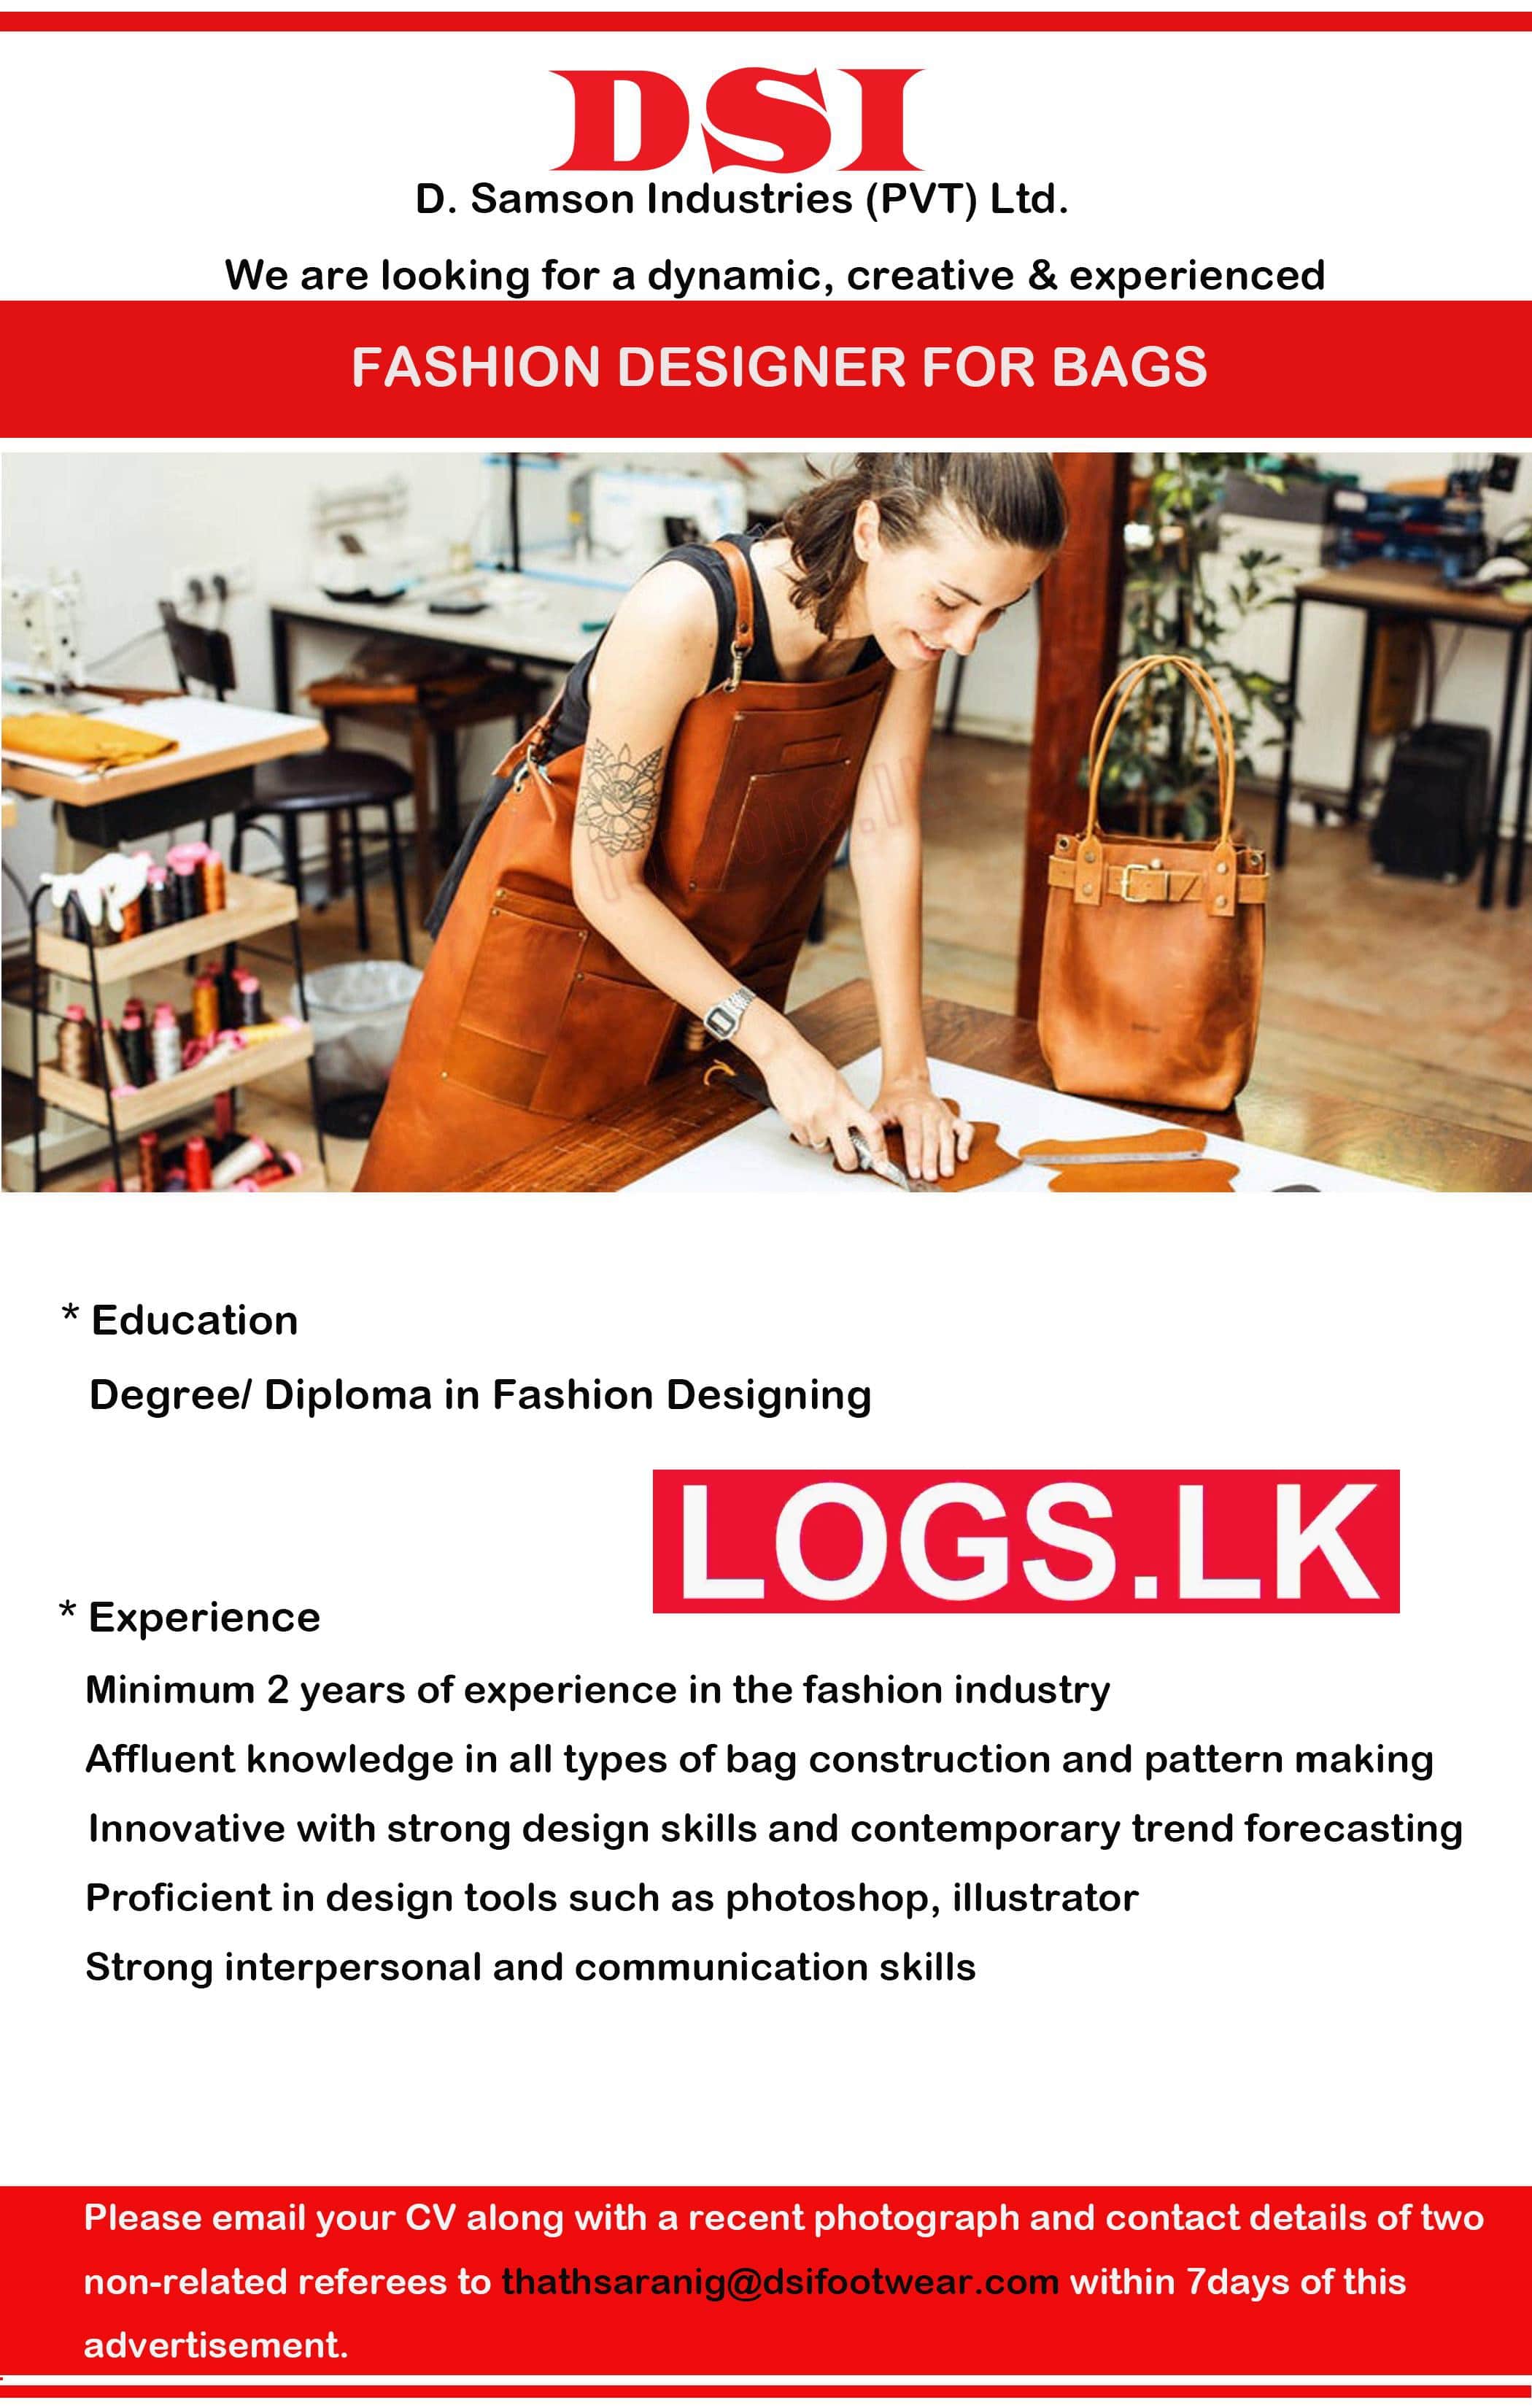 Fashion Designer for bags Job Vacancy in DSI Company Jobs Vacancies Details, Application Form Download